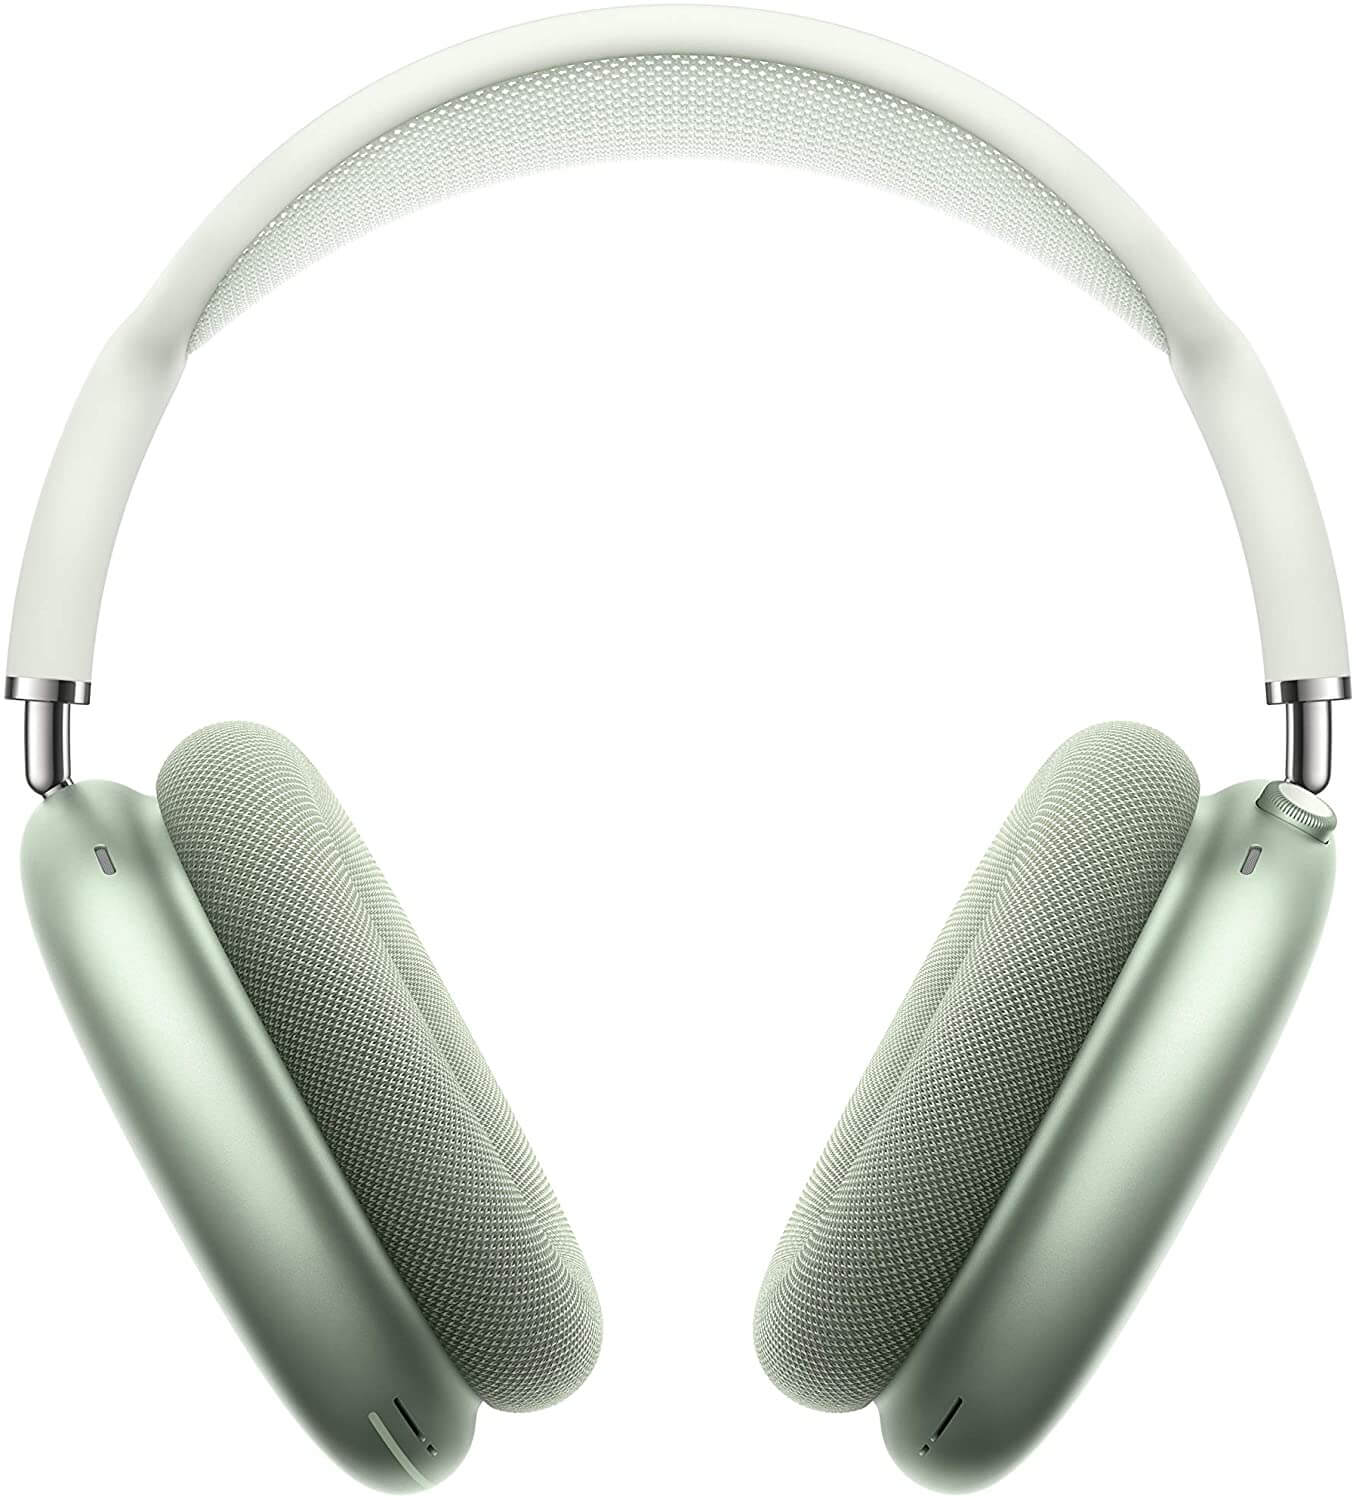 Apple AirPods Max Wireless Headphones